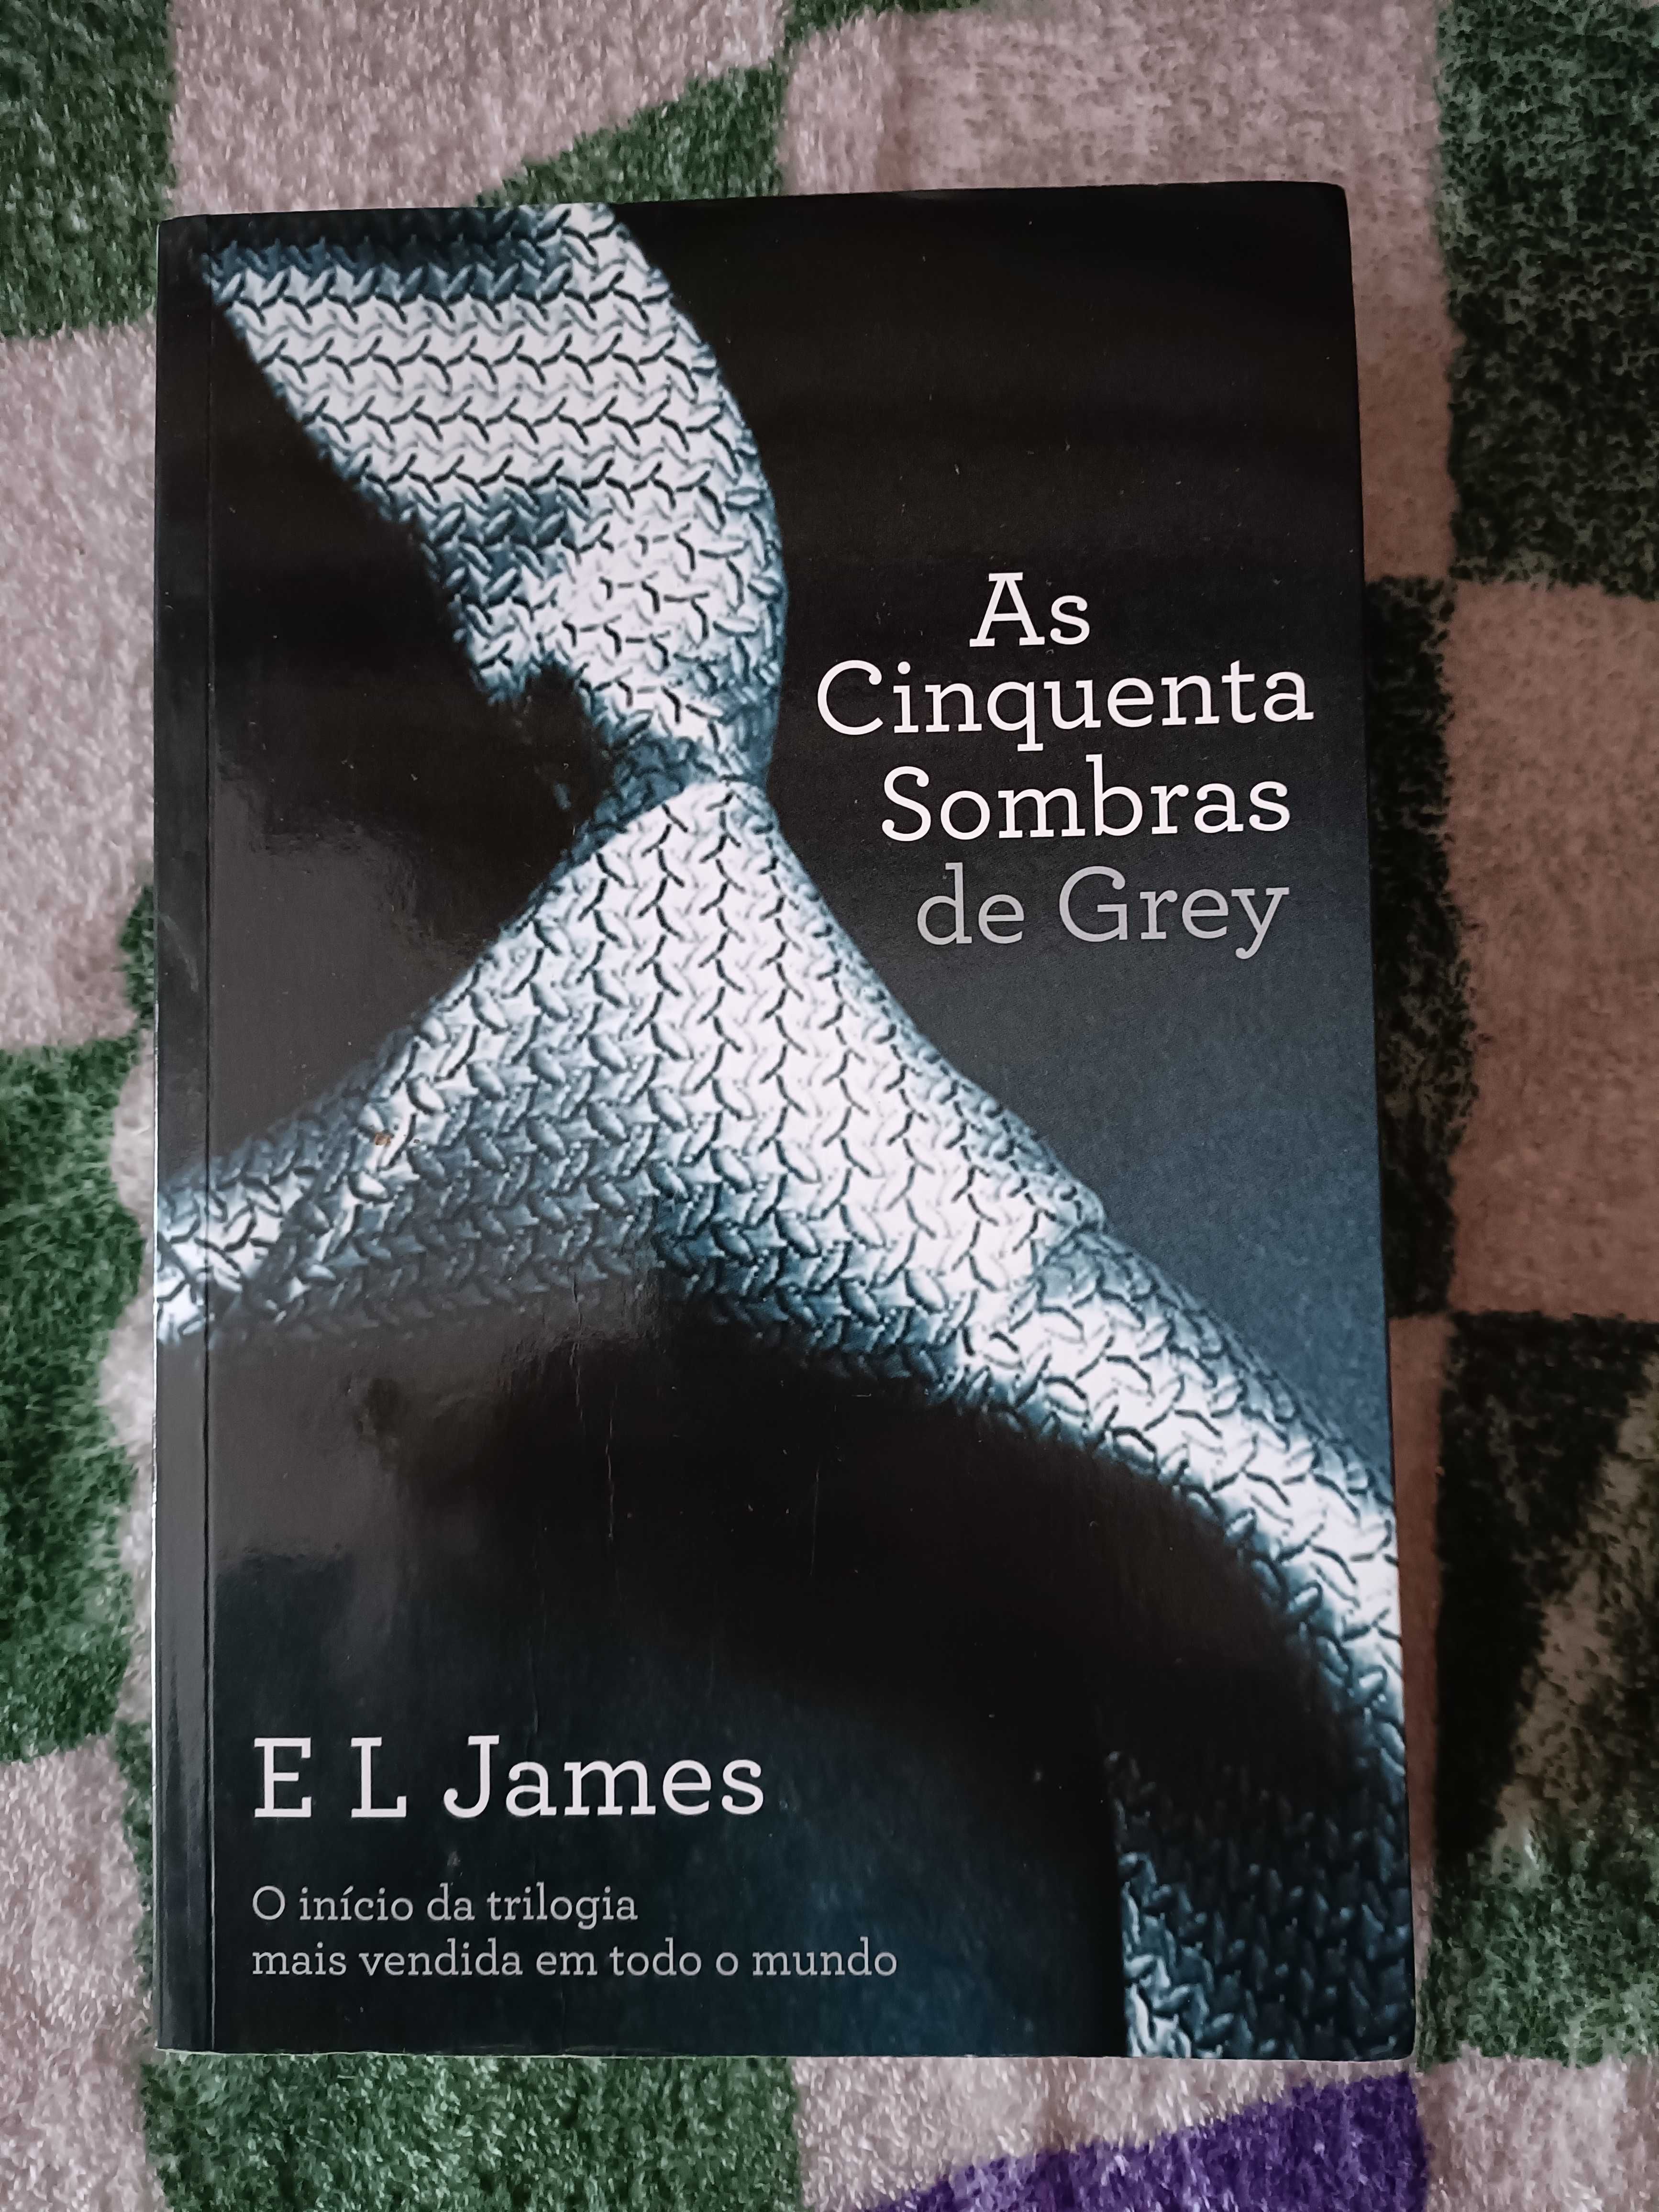 Trilogia "As Cinquenta Sombras de Grey" de E. L. James